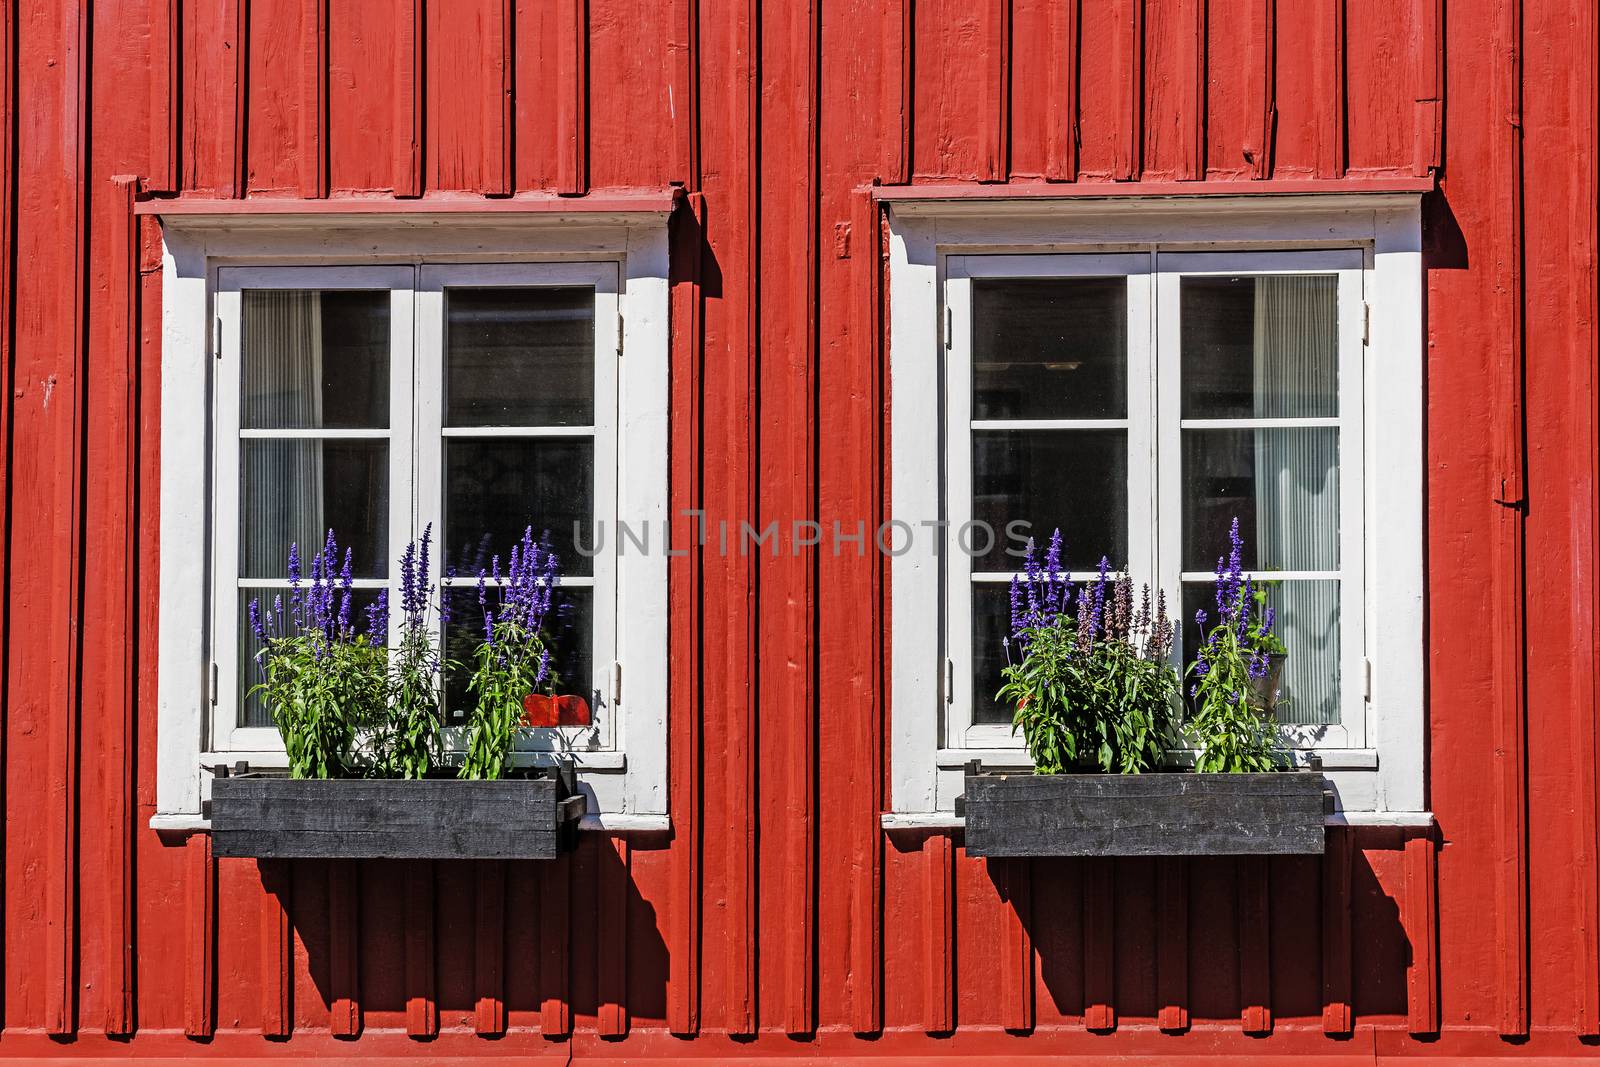 Windows on a wooden facade, by pawel_szczepanski